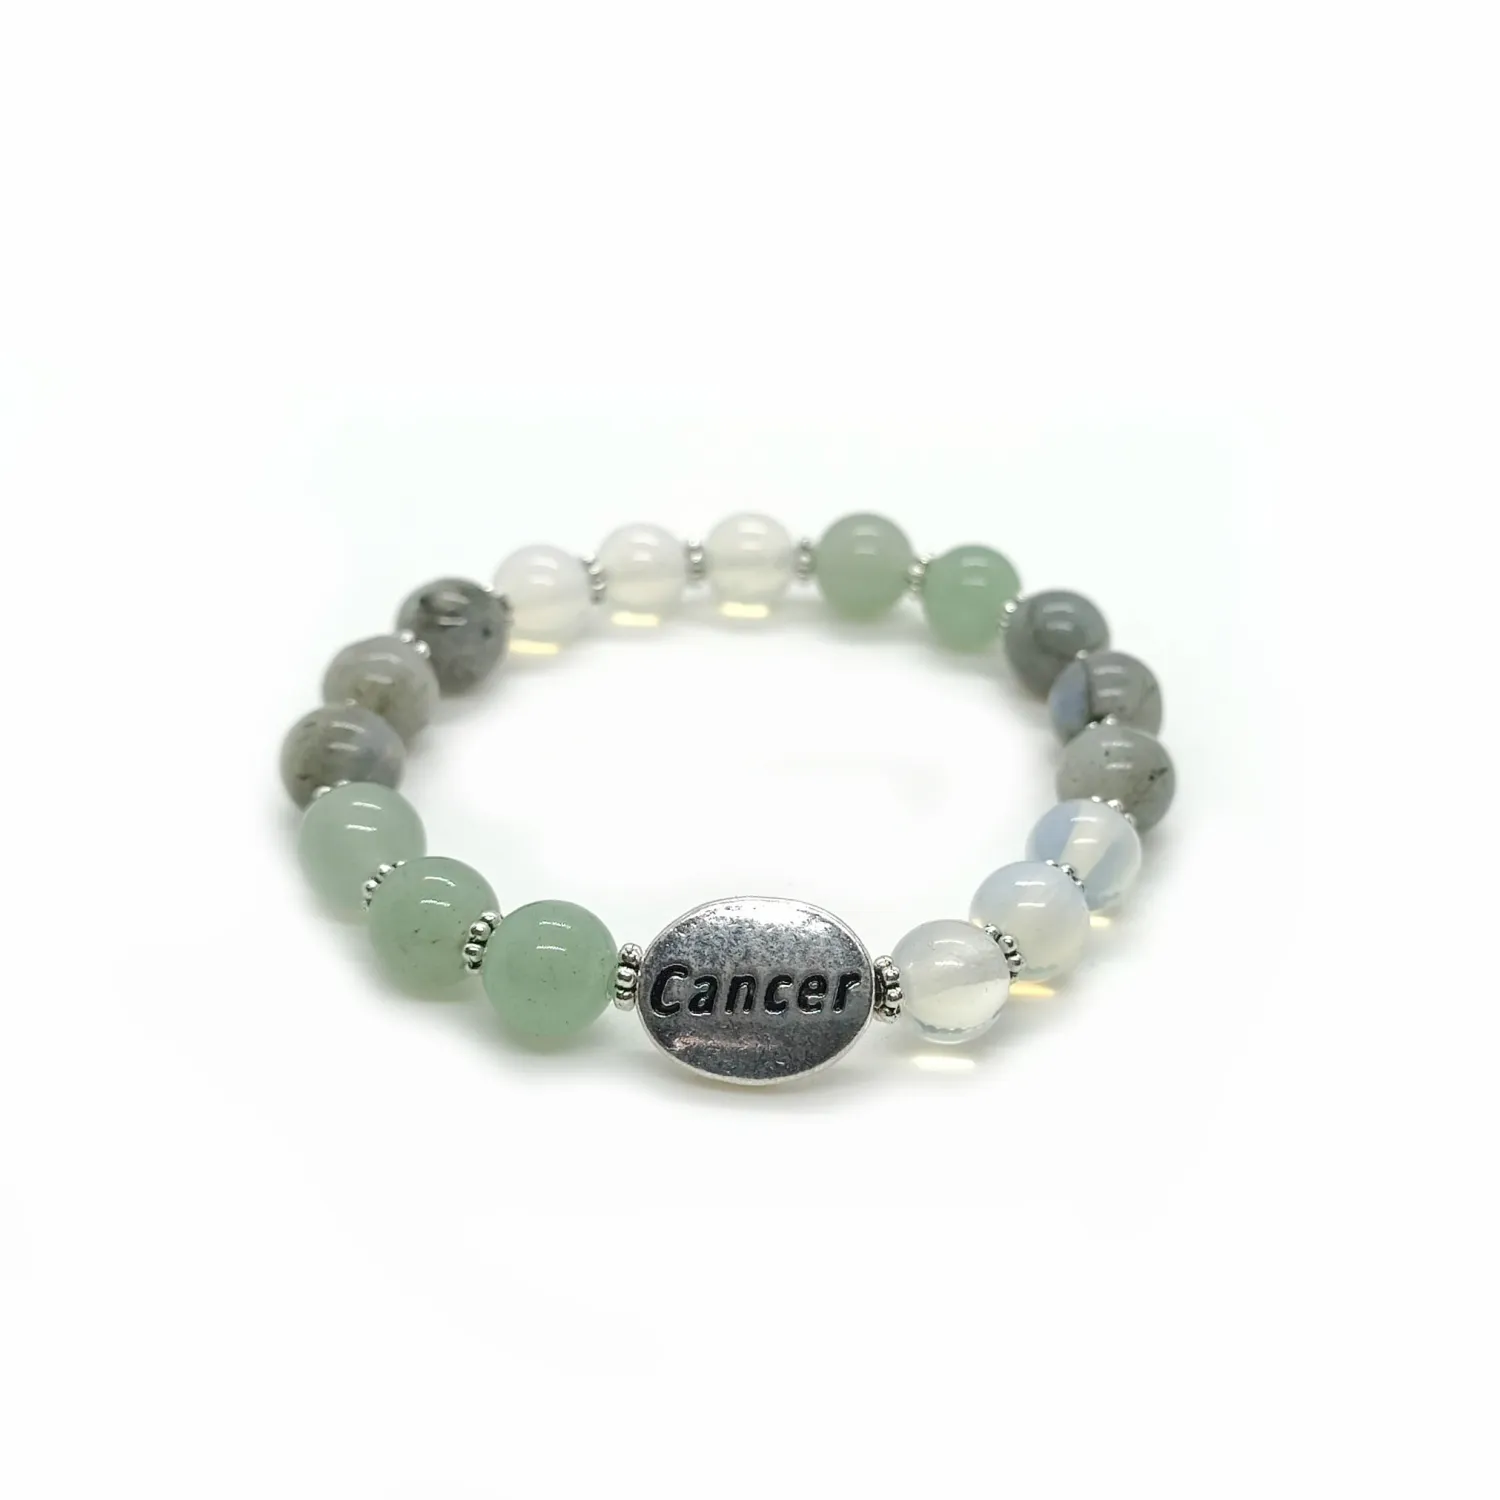 Zodiac bracelet - Cancer